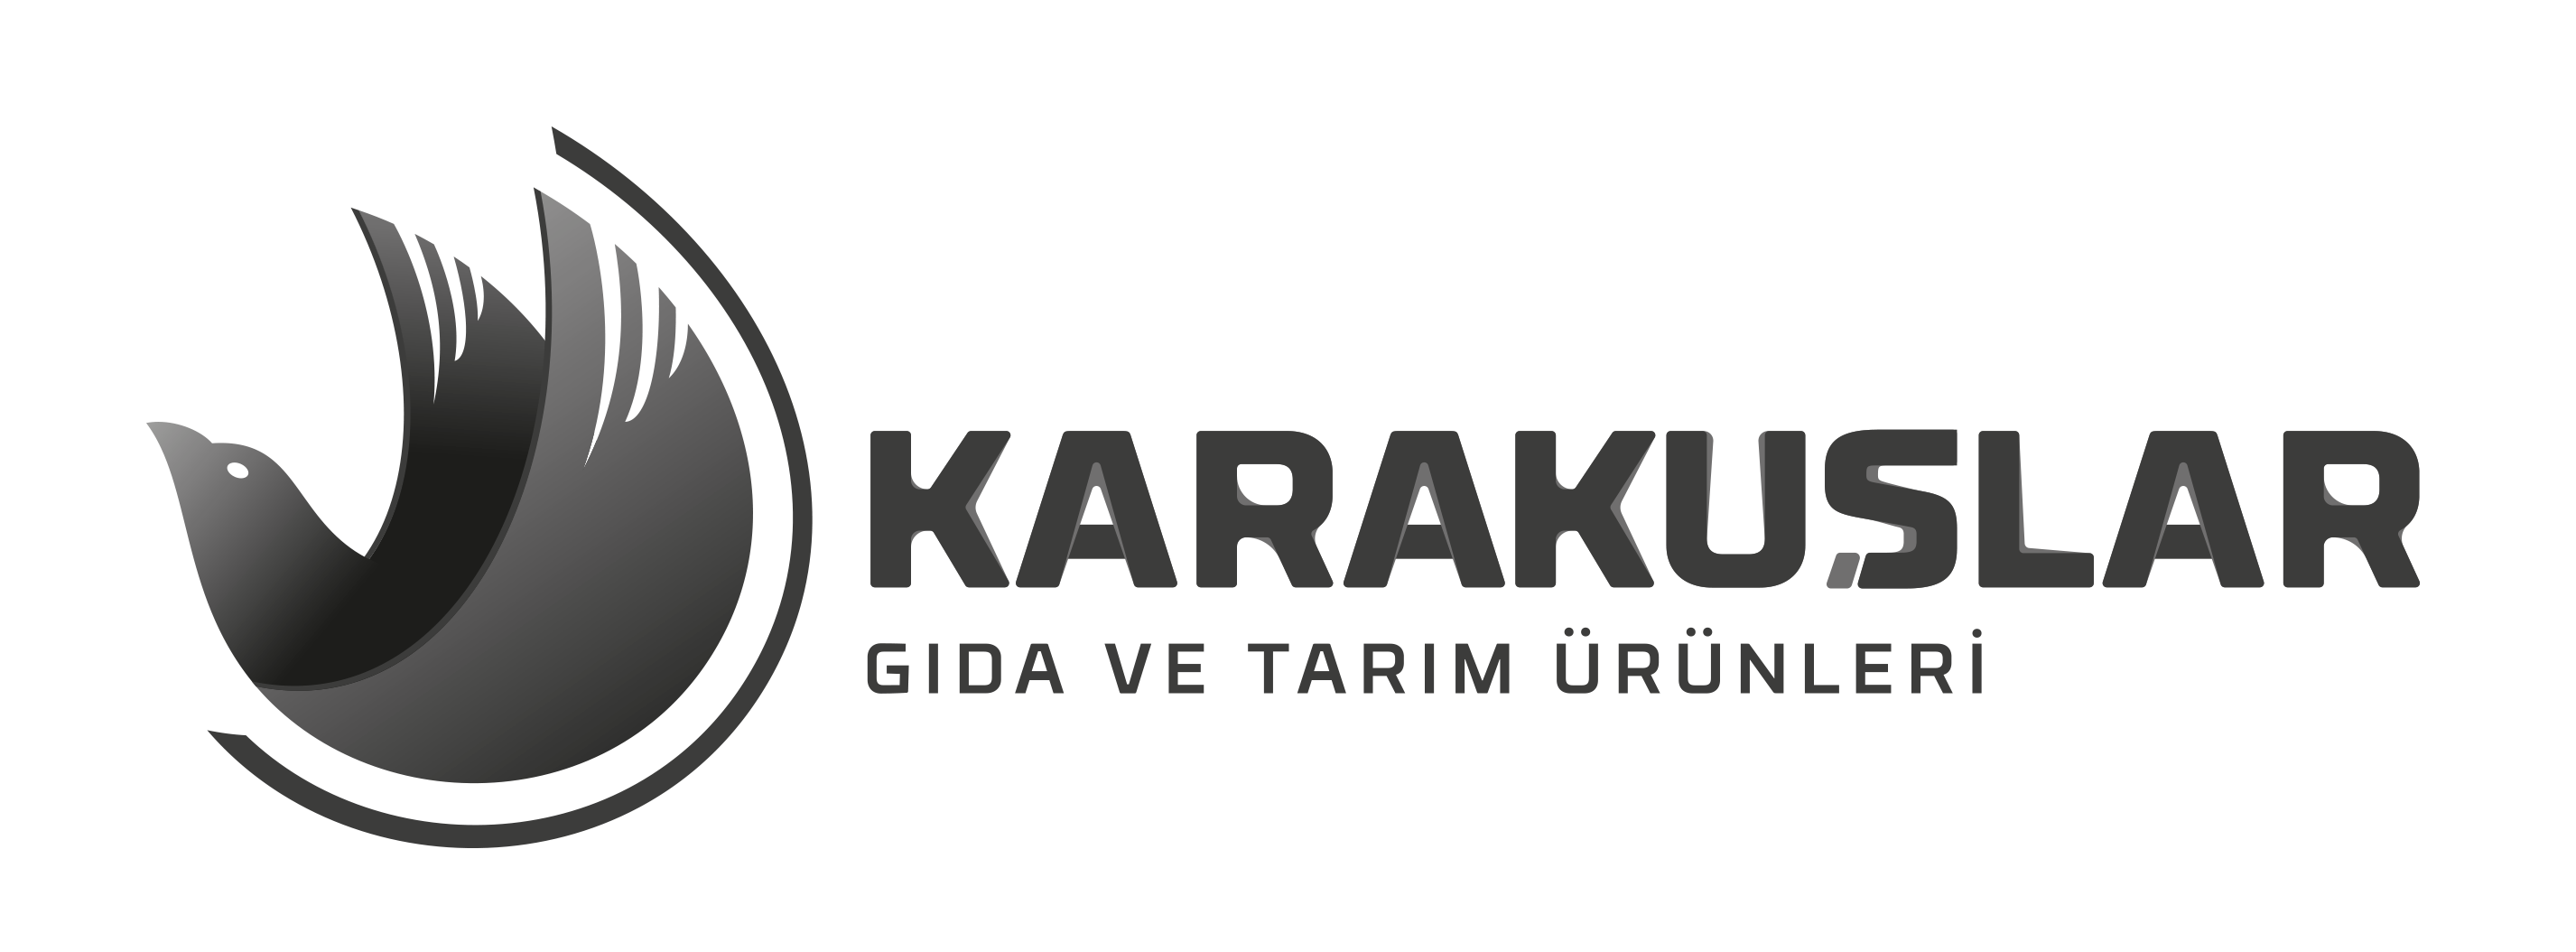 Karakusar